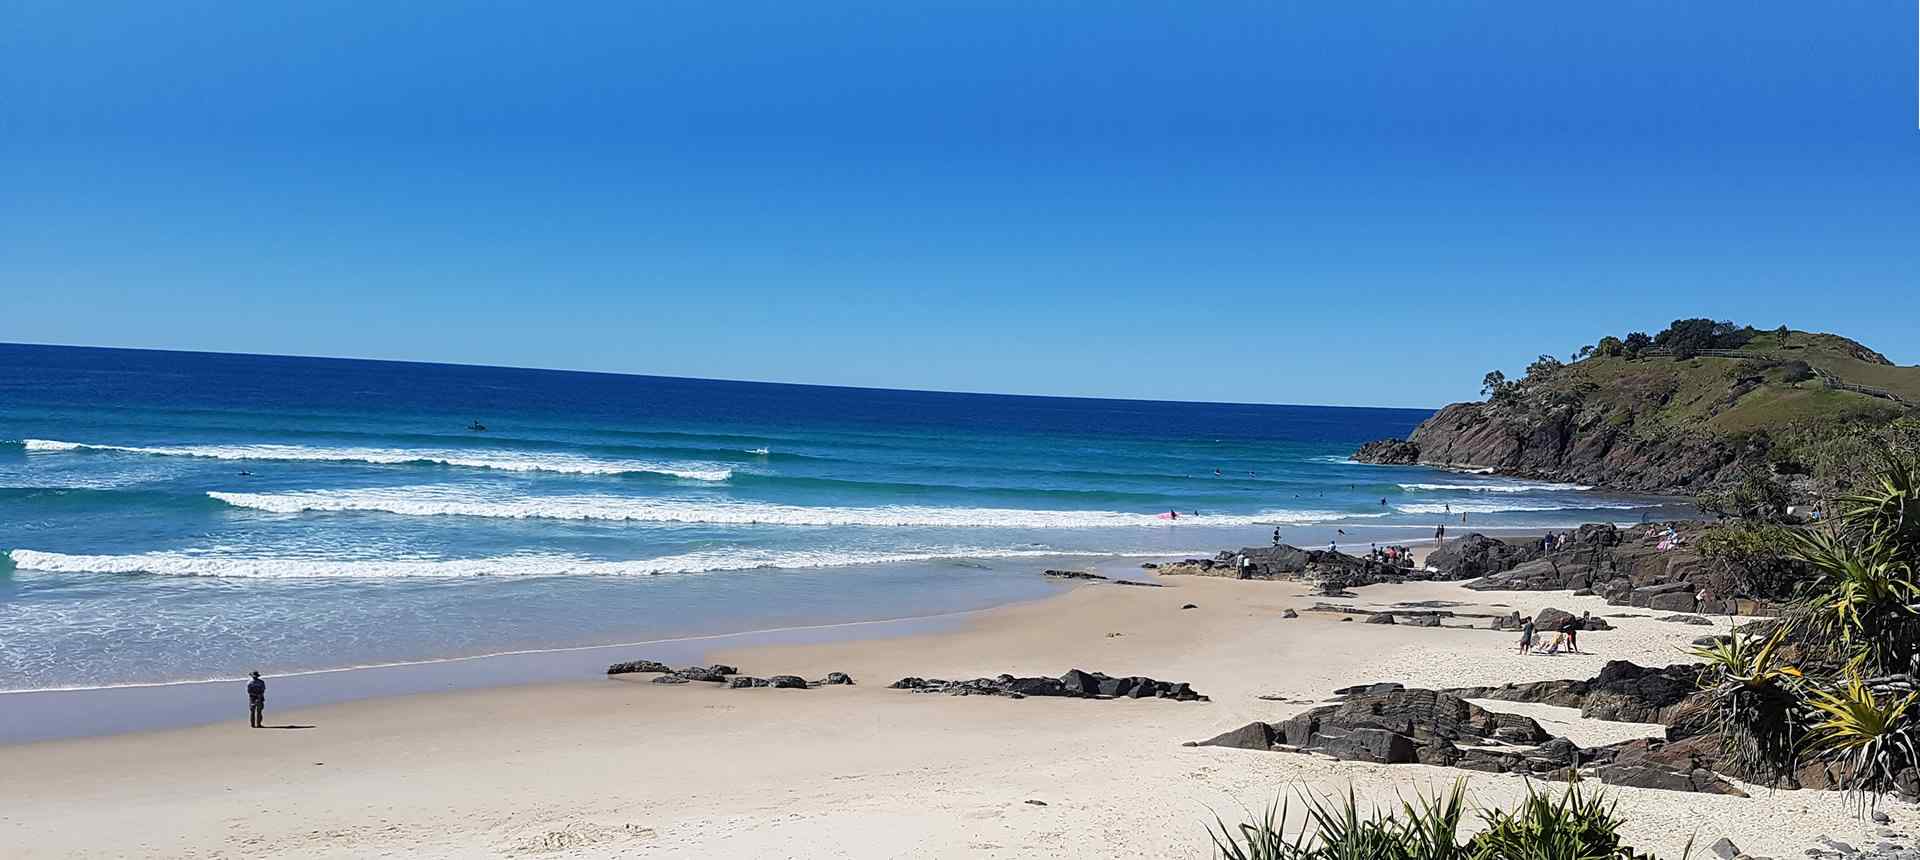 Visto australia cabarita beach